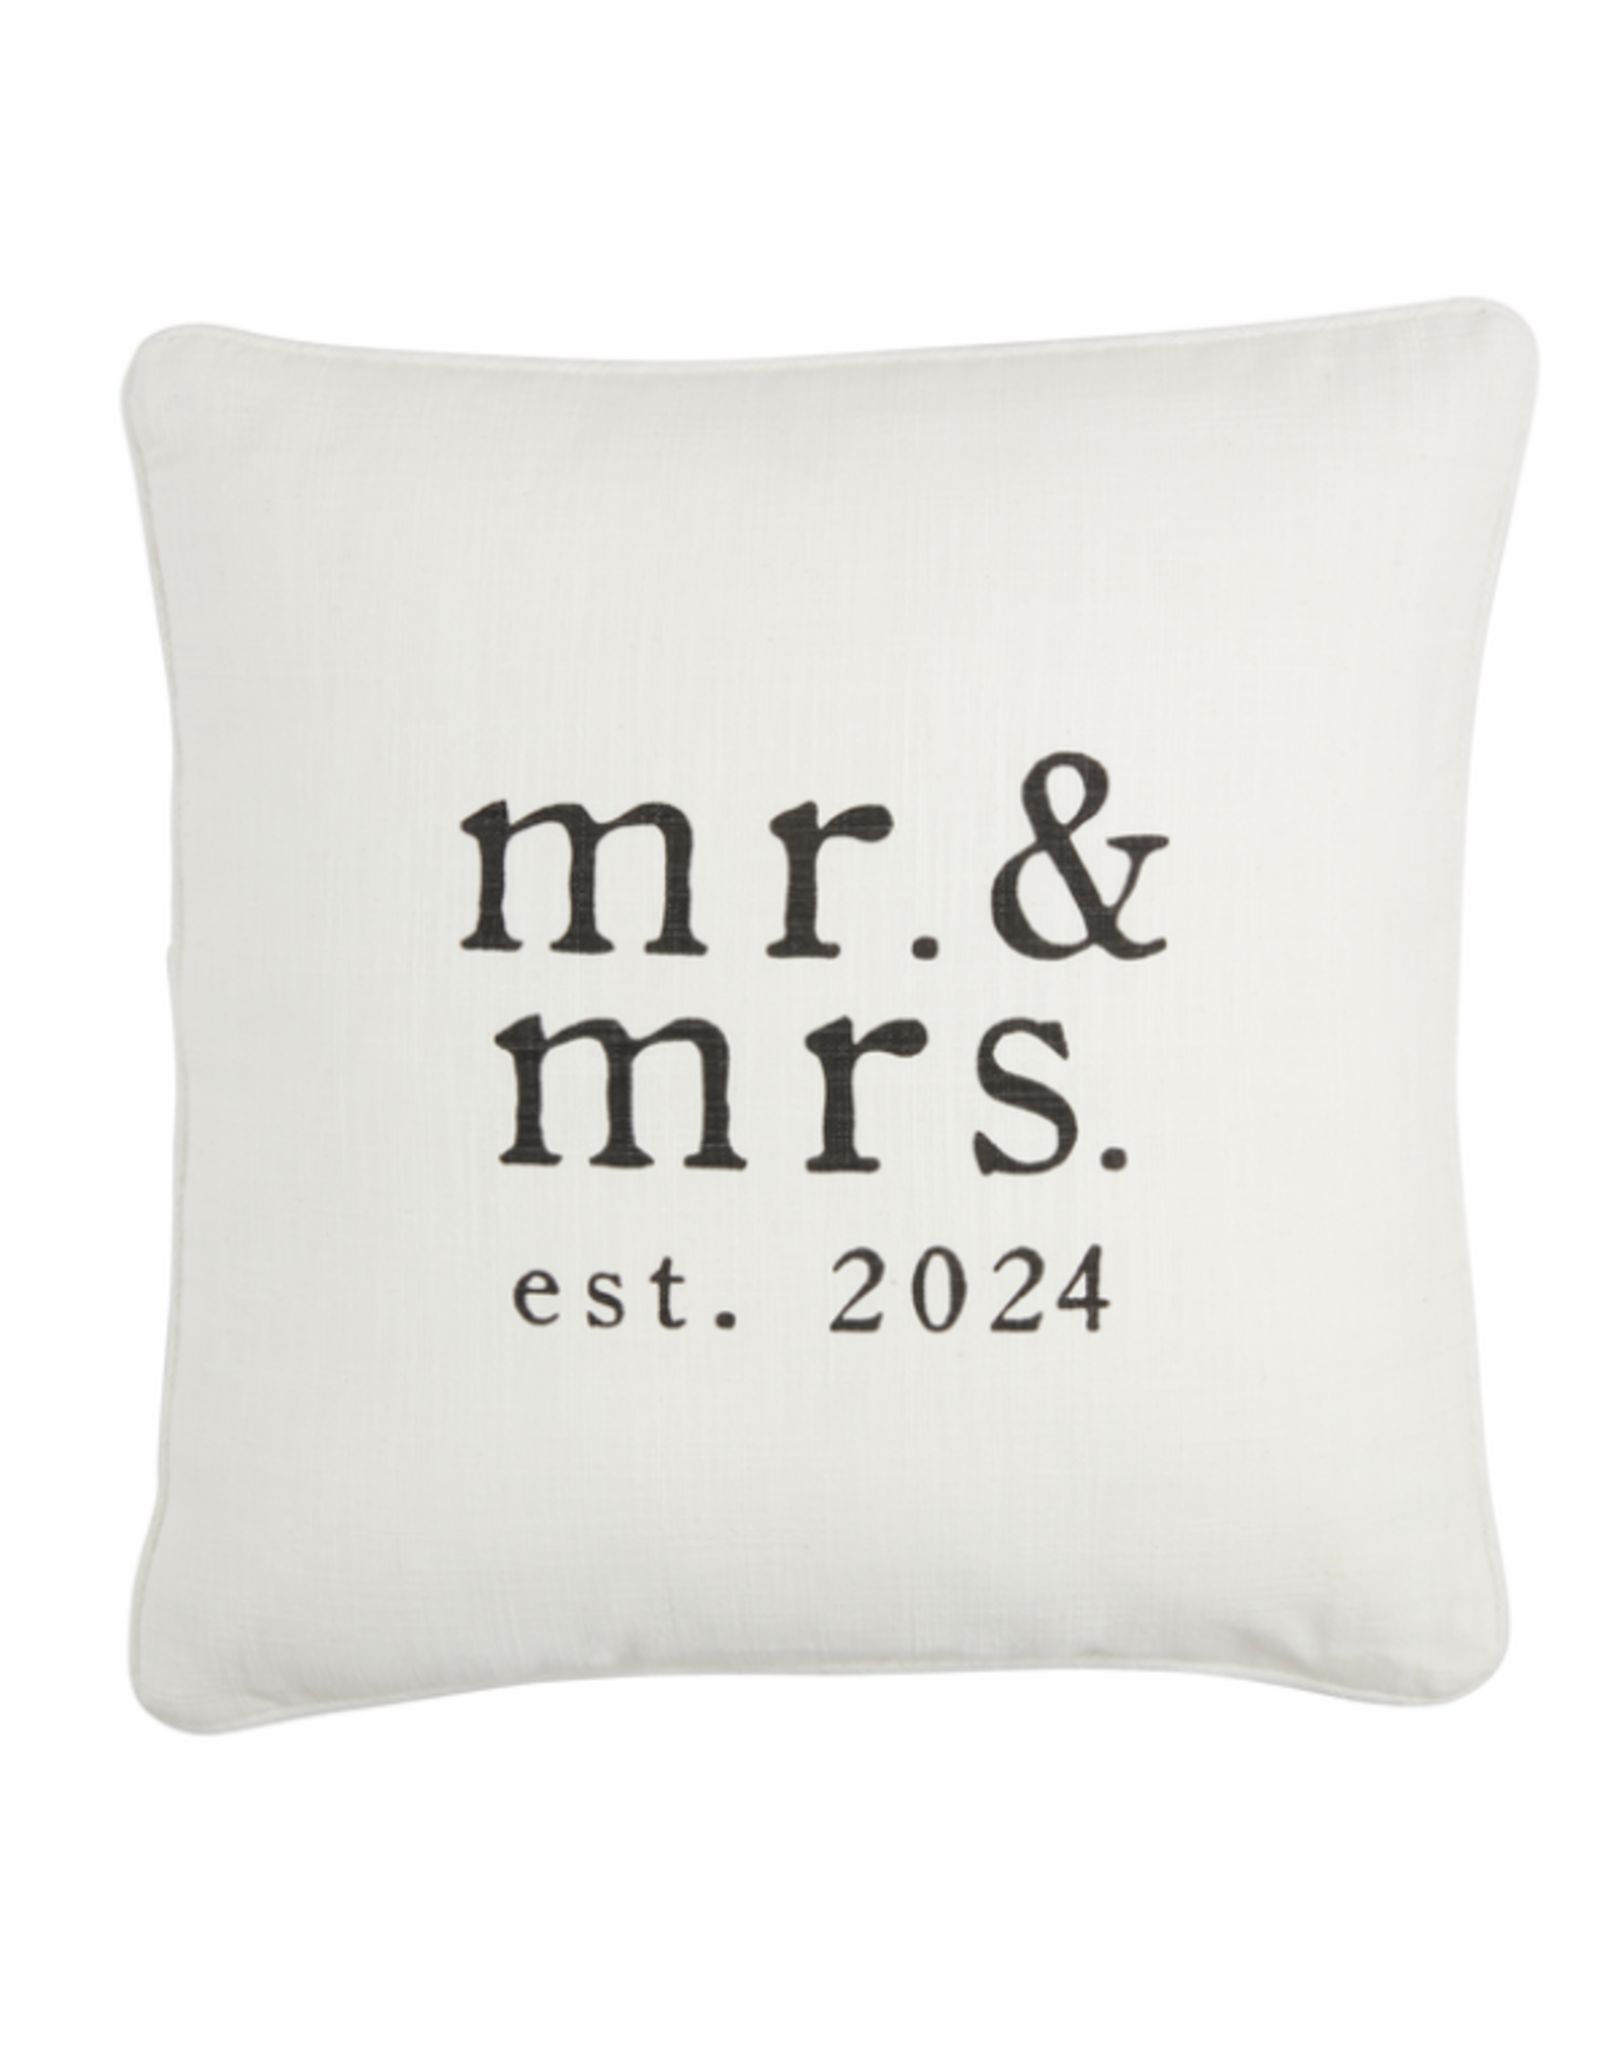 Mud Pie Mr Mrs Est 2024 Square Pillow